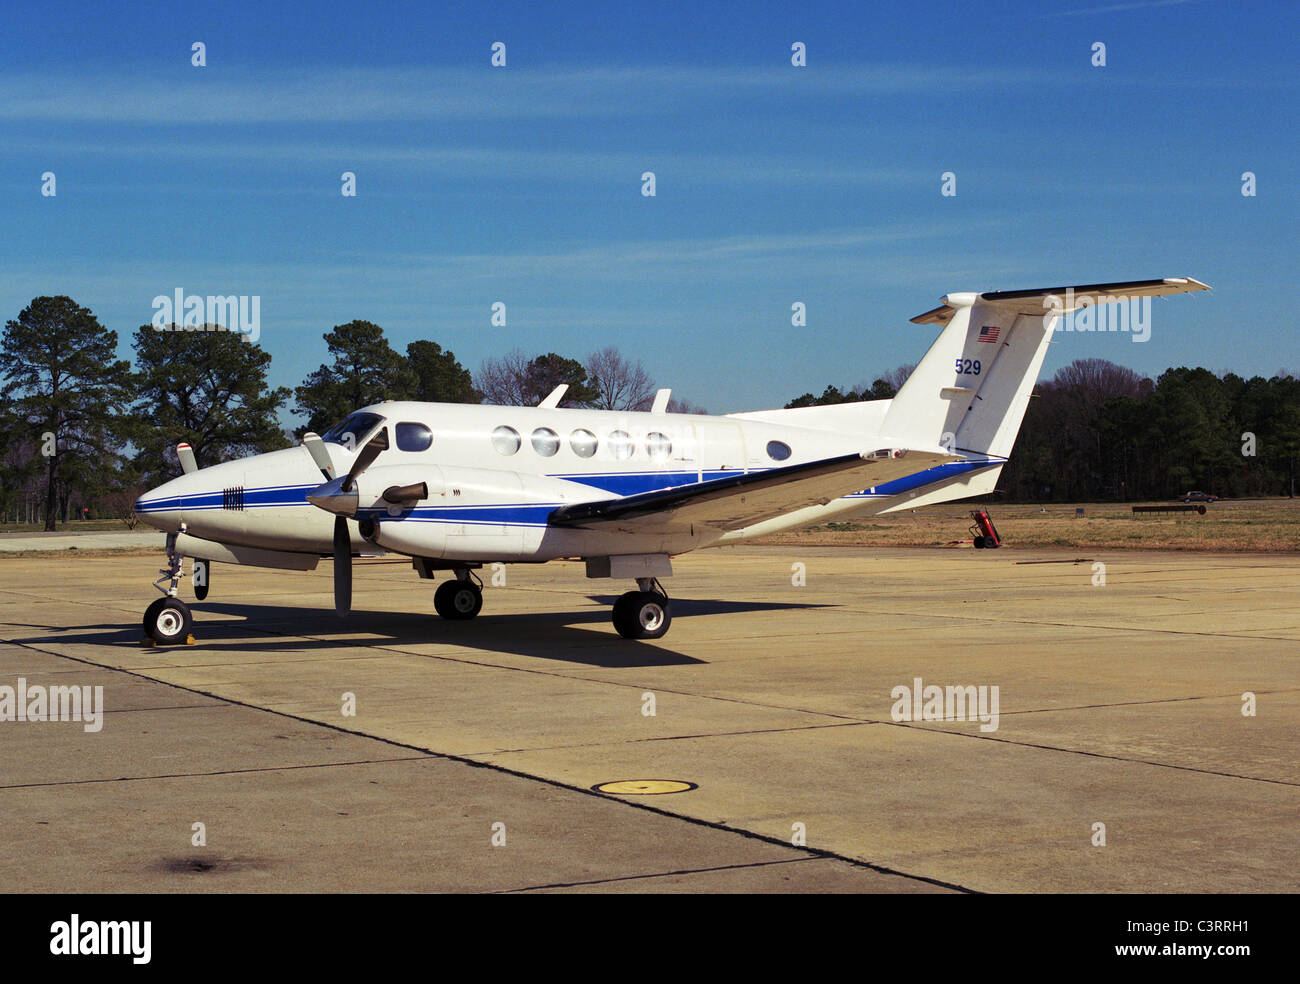 The B-200 King Air turbo prop Stock Photo